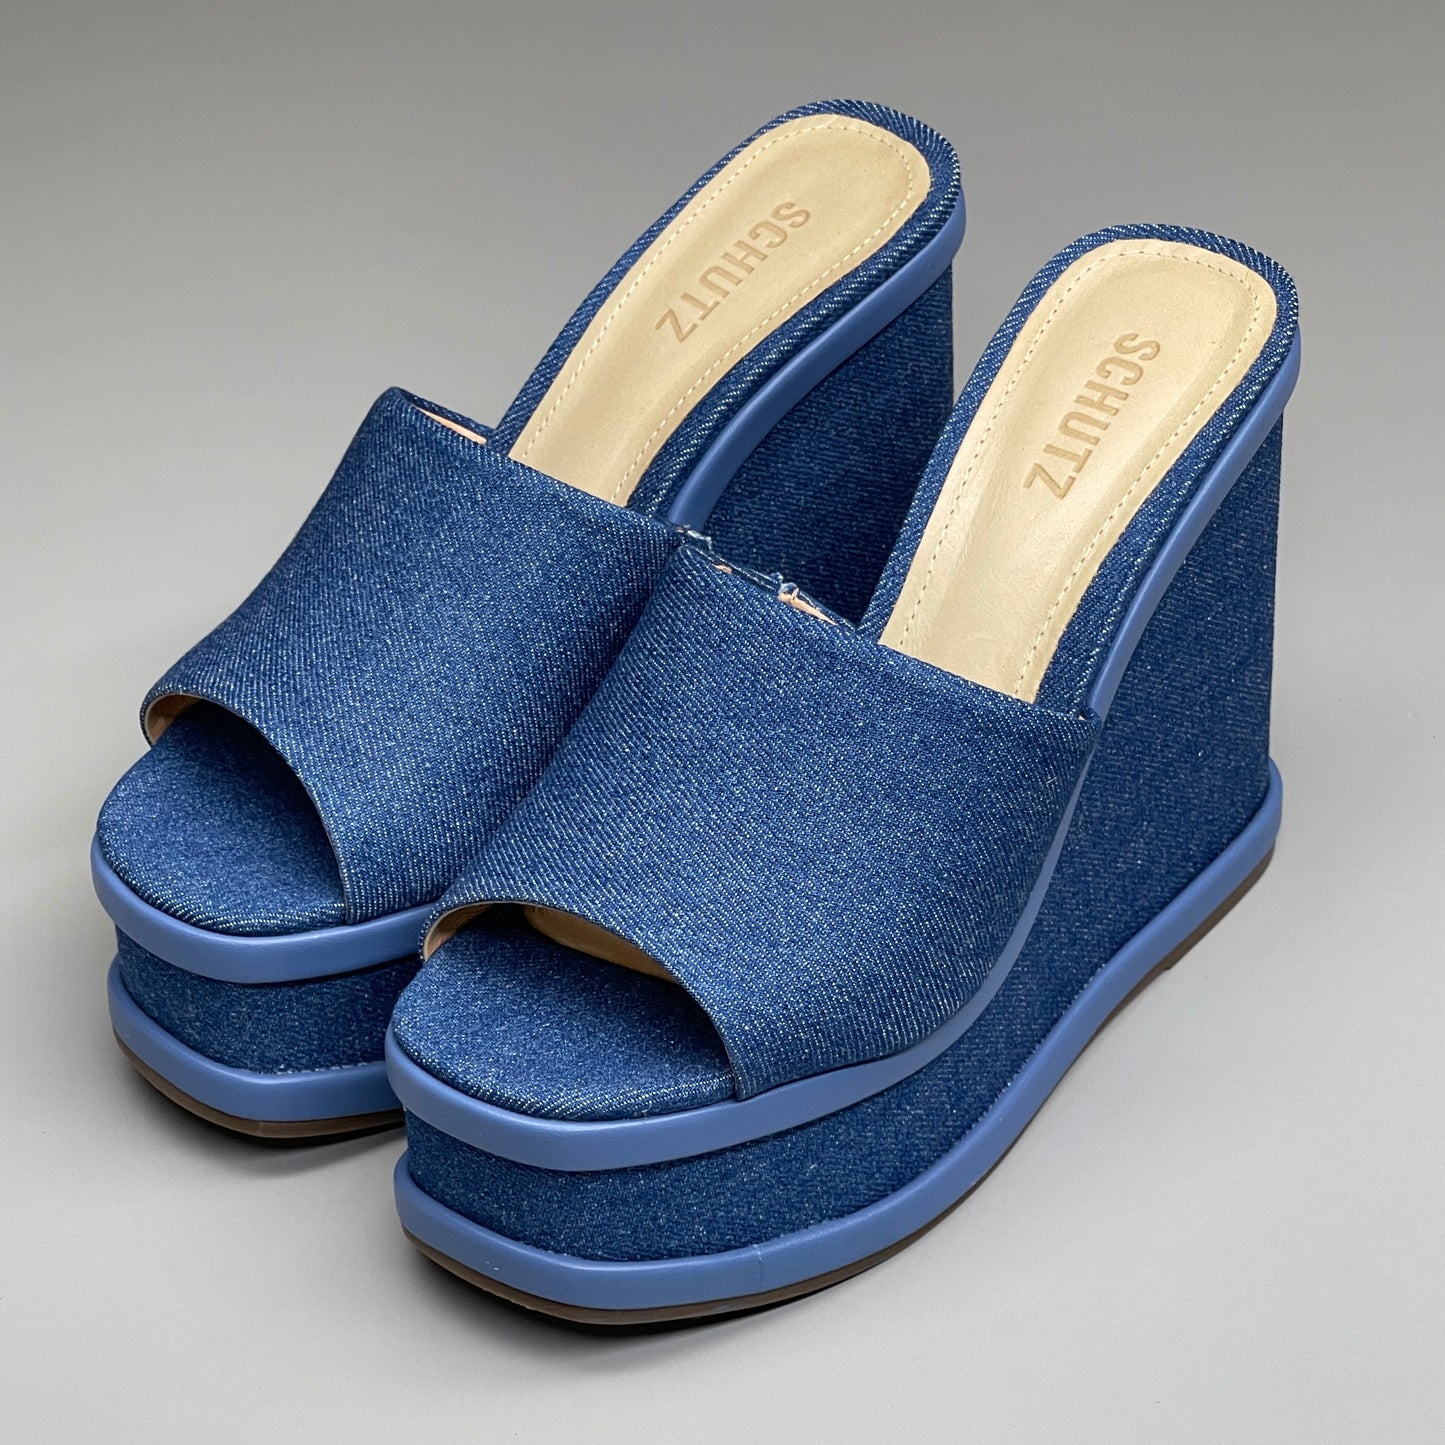 SCHUTZ Dalle Denim Women's Wedge Sandal Blue Platform Shoe Sz 6.5B S213260001 (New)